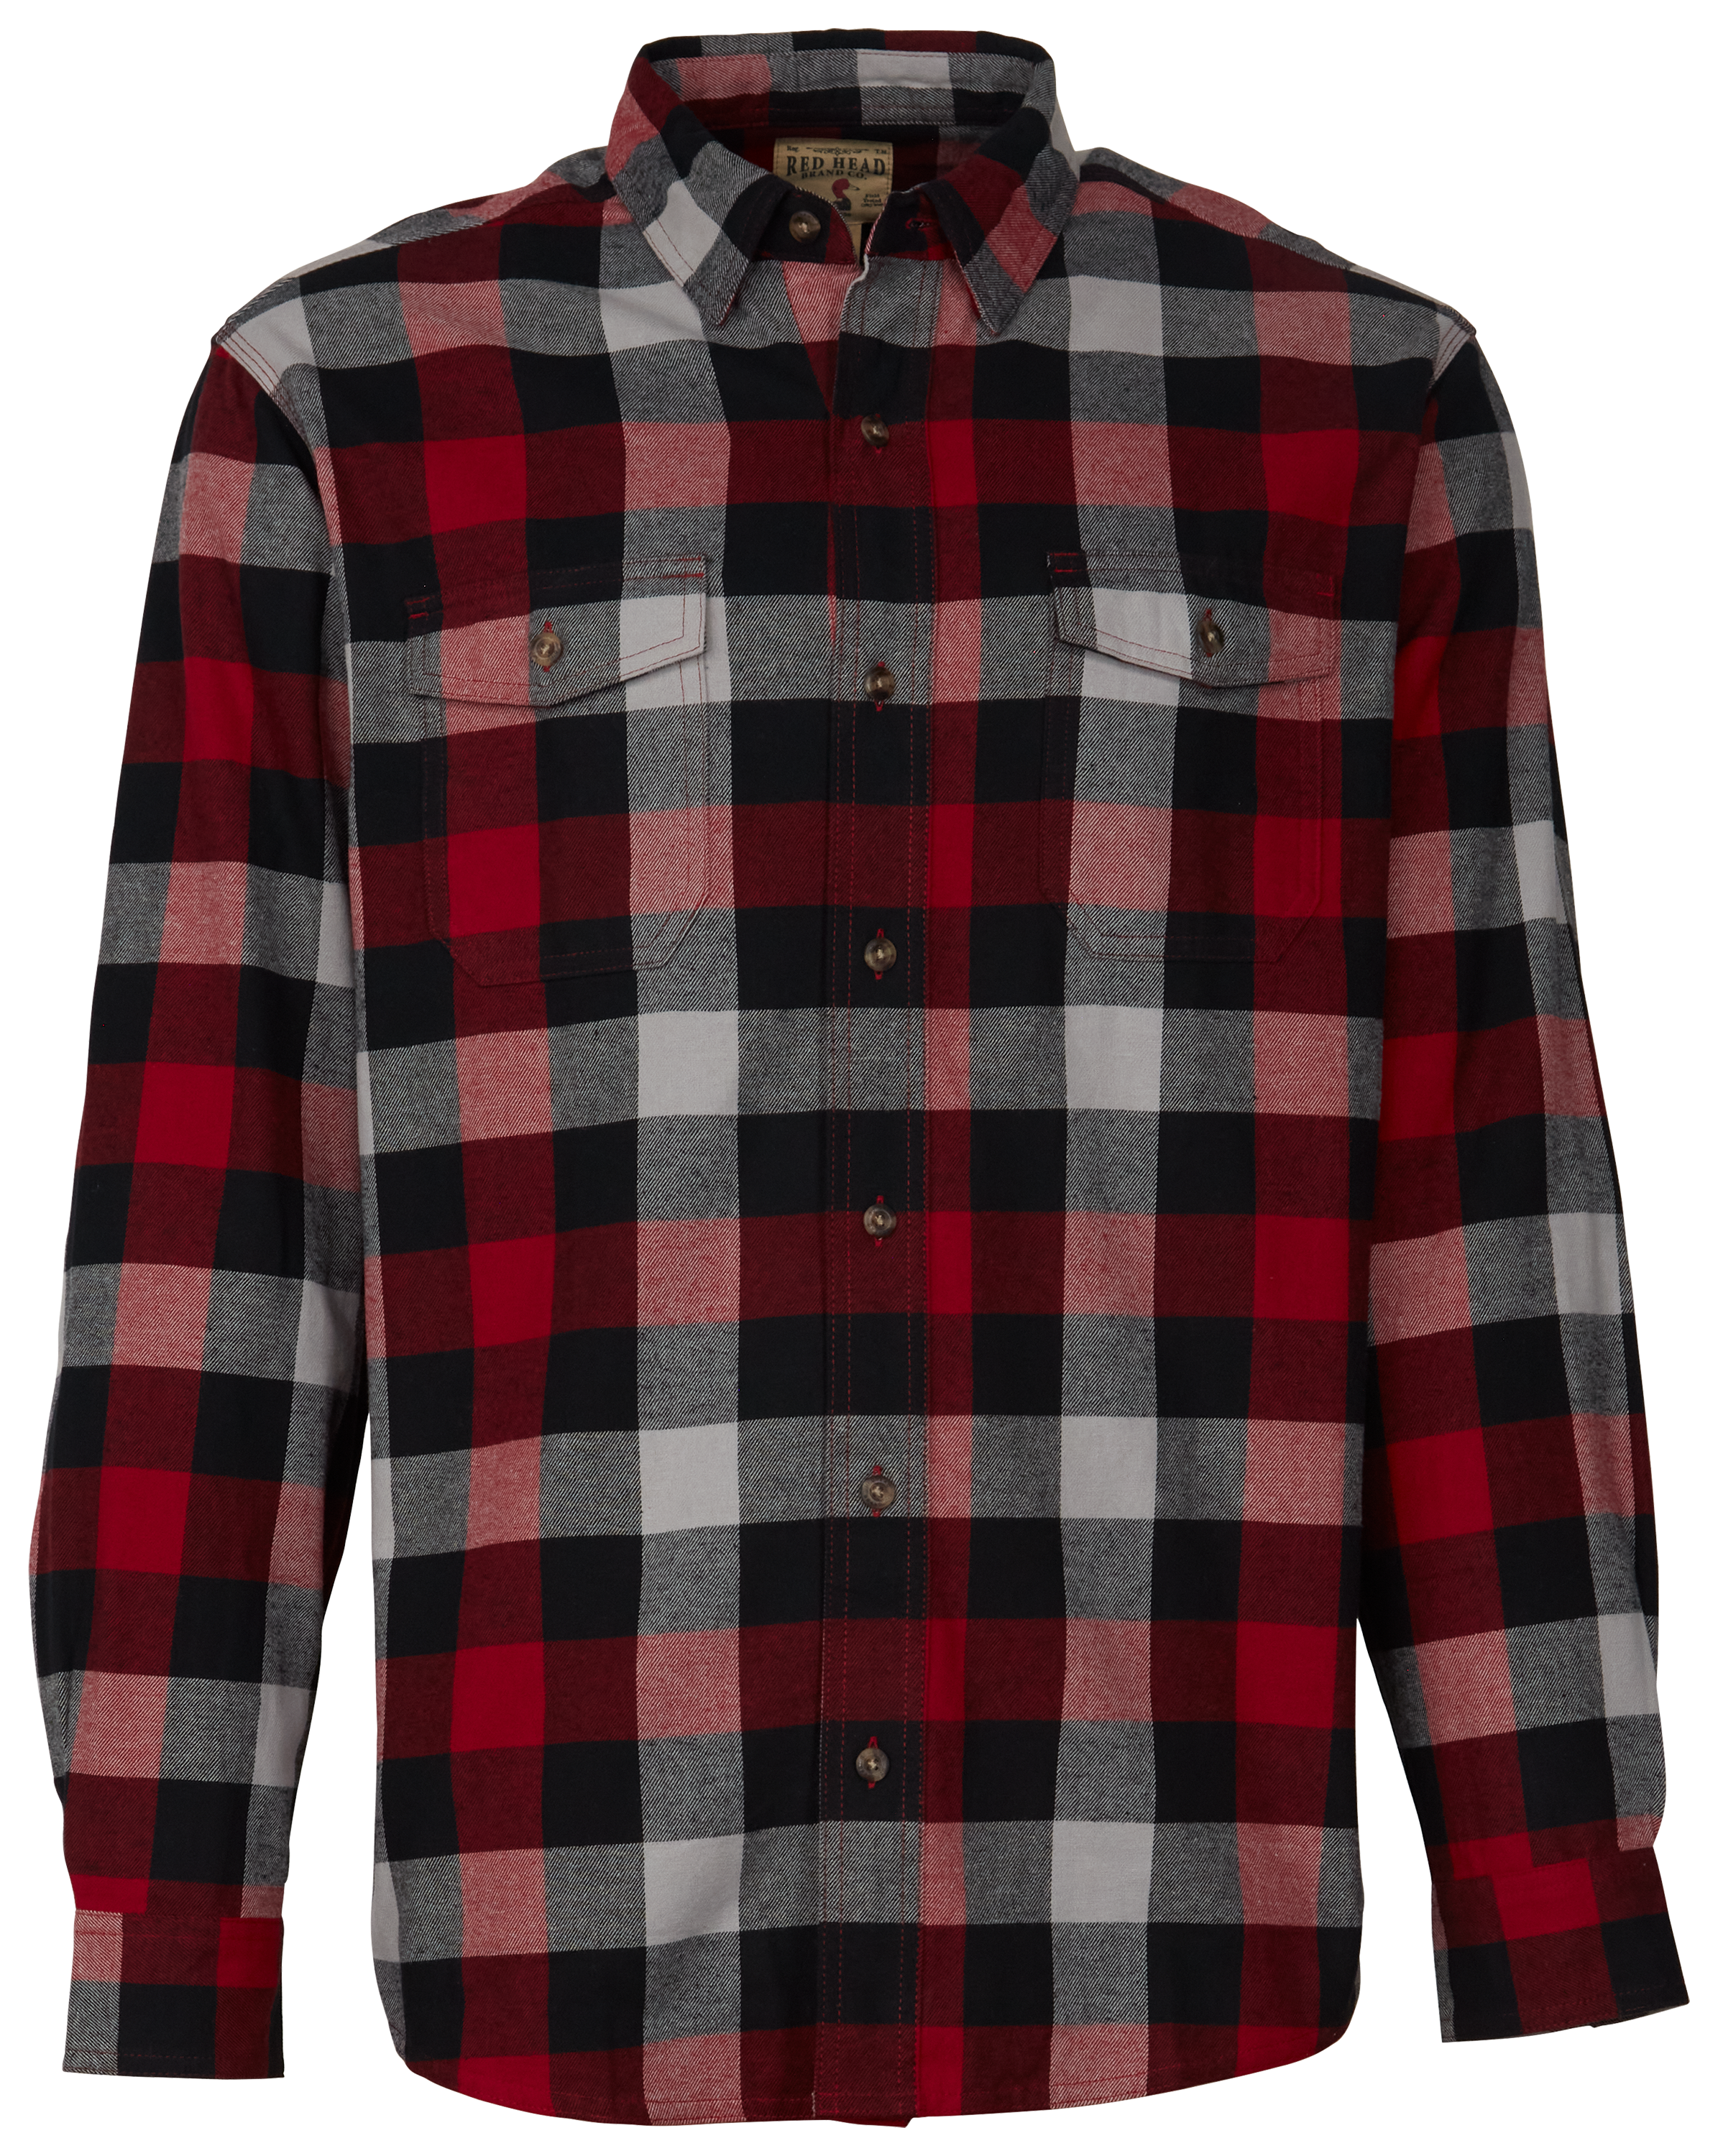 RedHead Buffalo Creek Flannel Long-Sleeve Shirt for Men - Red/Gray - XLT